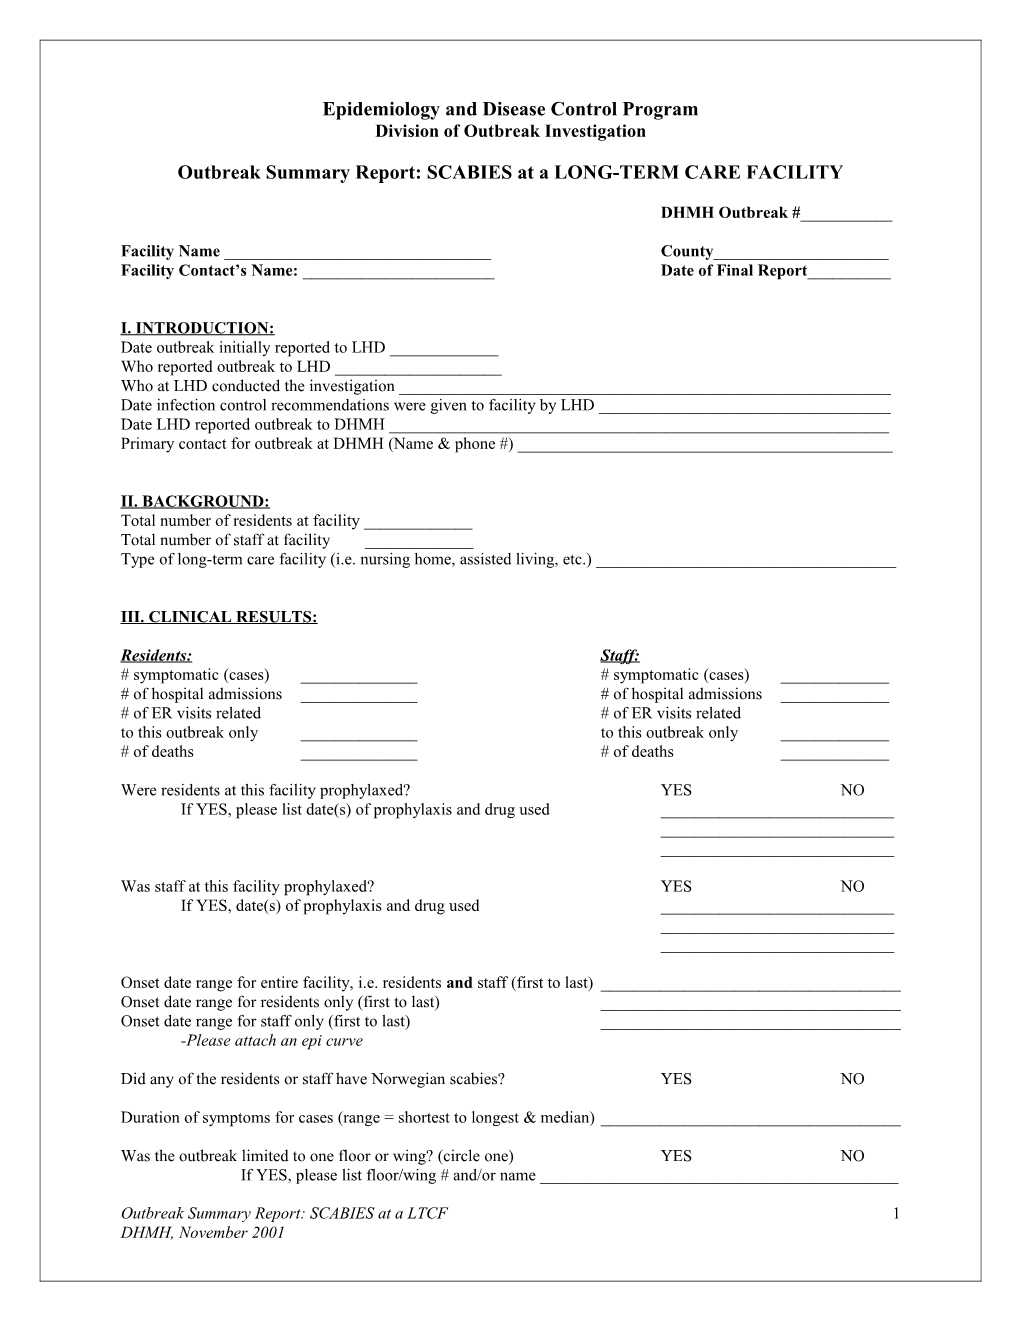 Checklist for Final Reports GASTROENTERITIS at a NURSING HOME